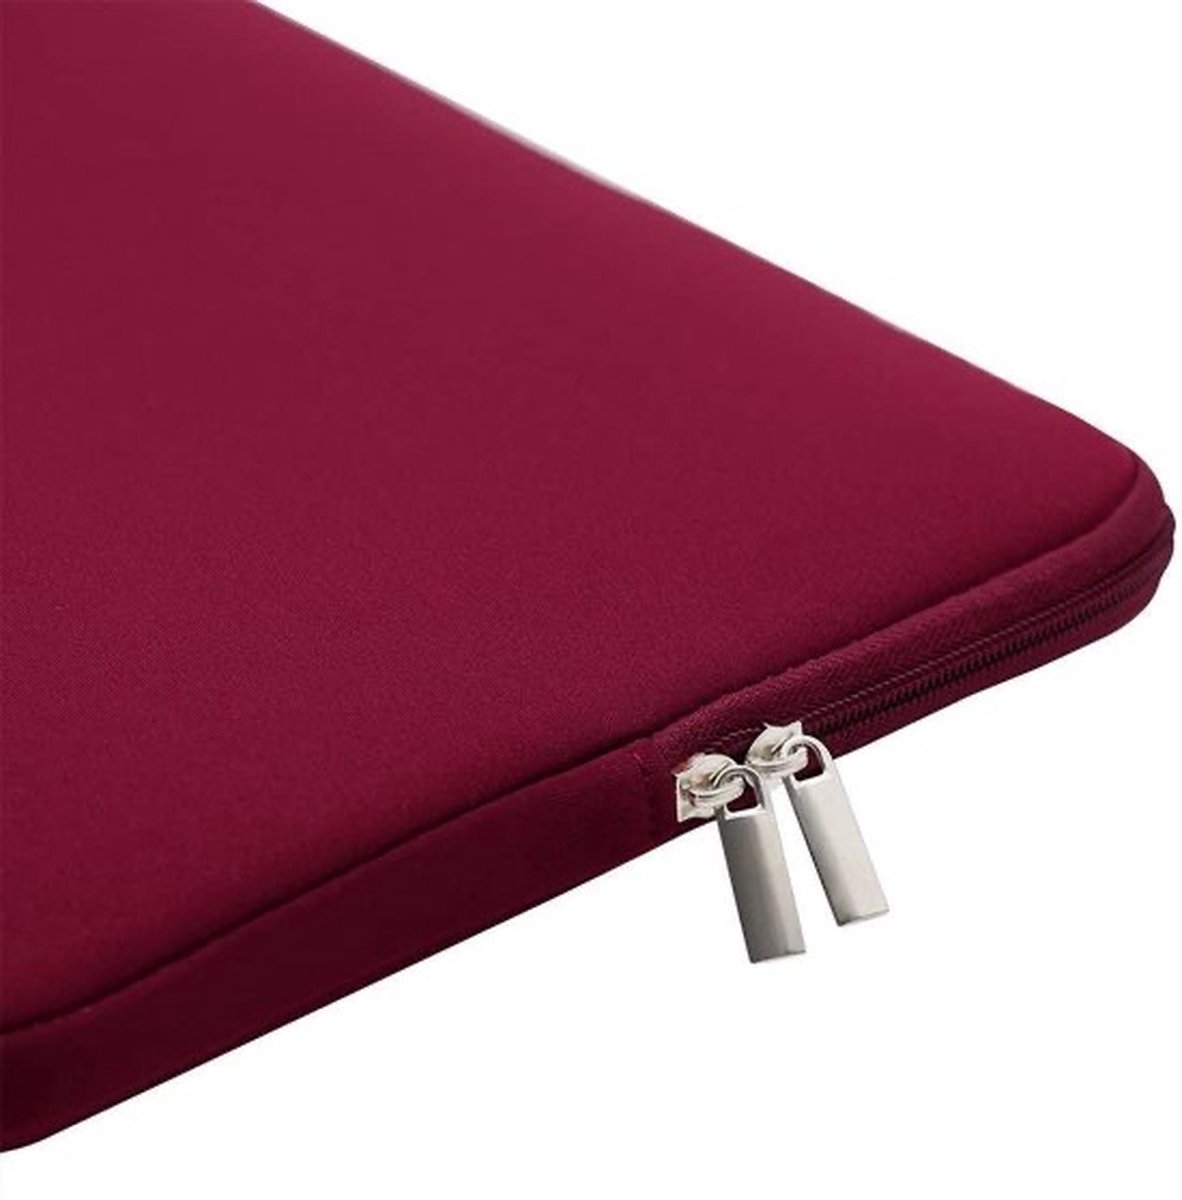 Laptop hoes - Met Ritssluiting - sleeve - spatwaterbestendig - extra bescherming - 11,6 inch ( bordeaux rood )